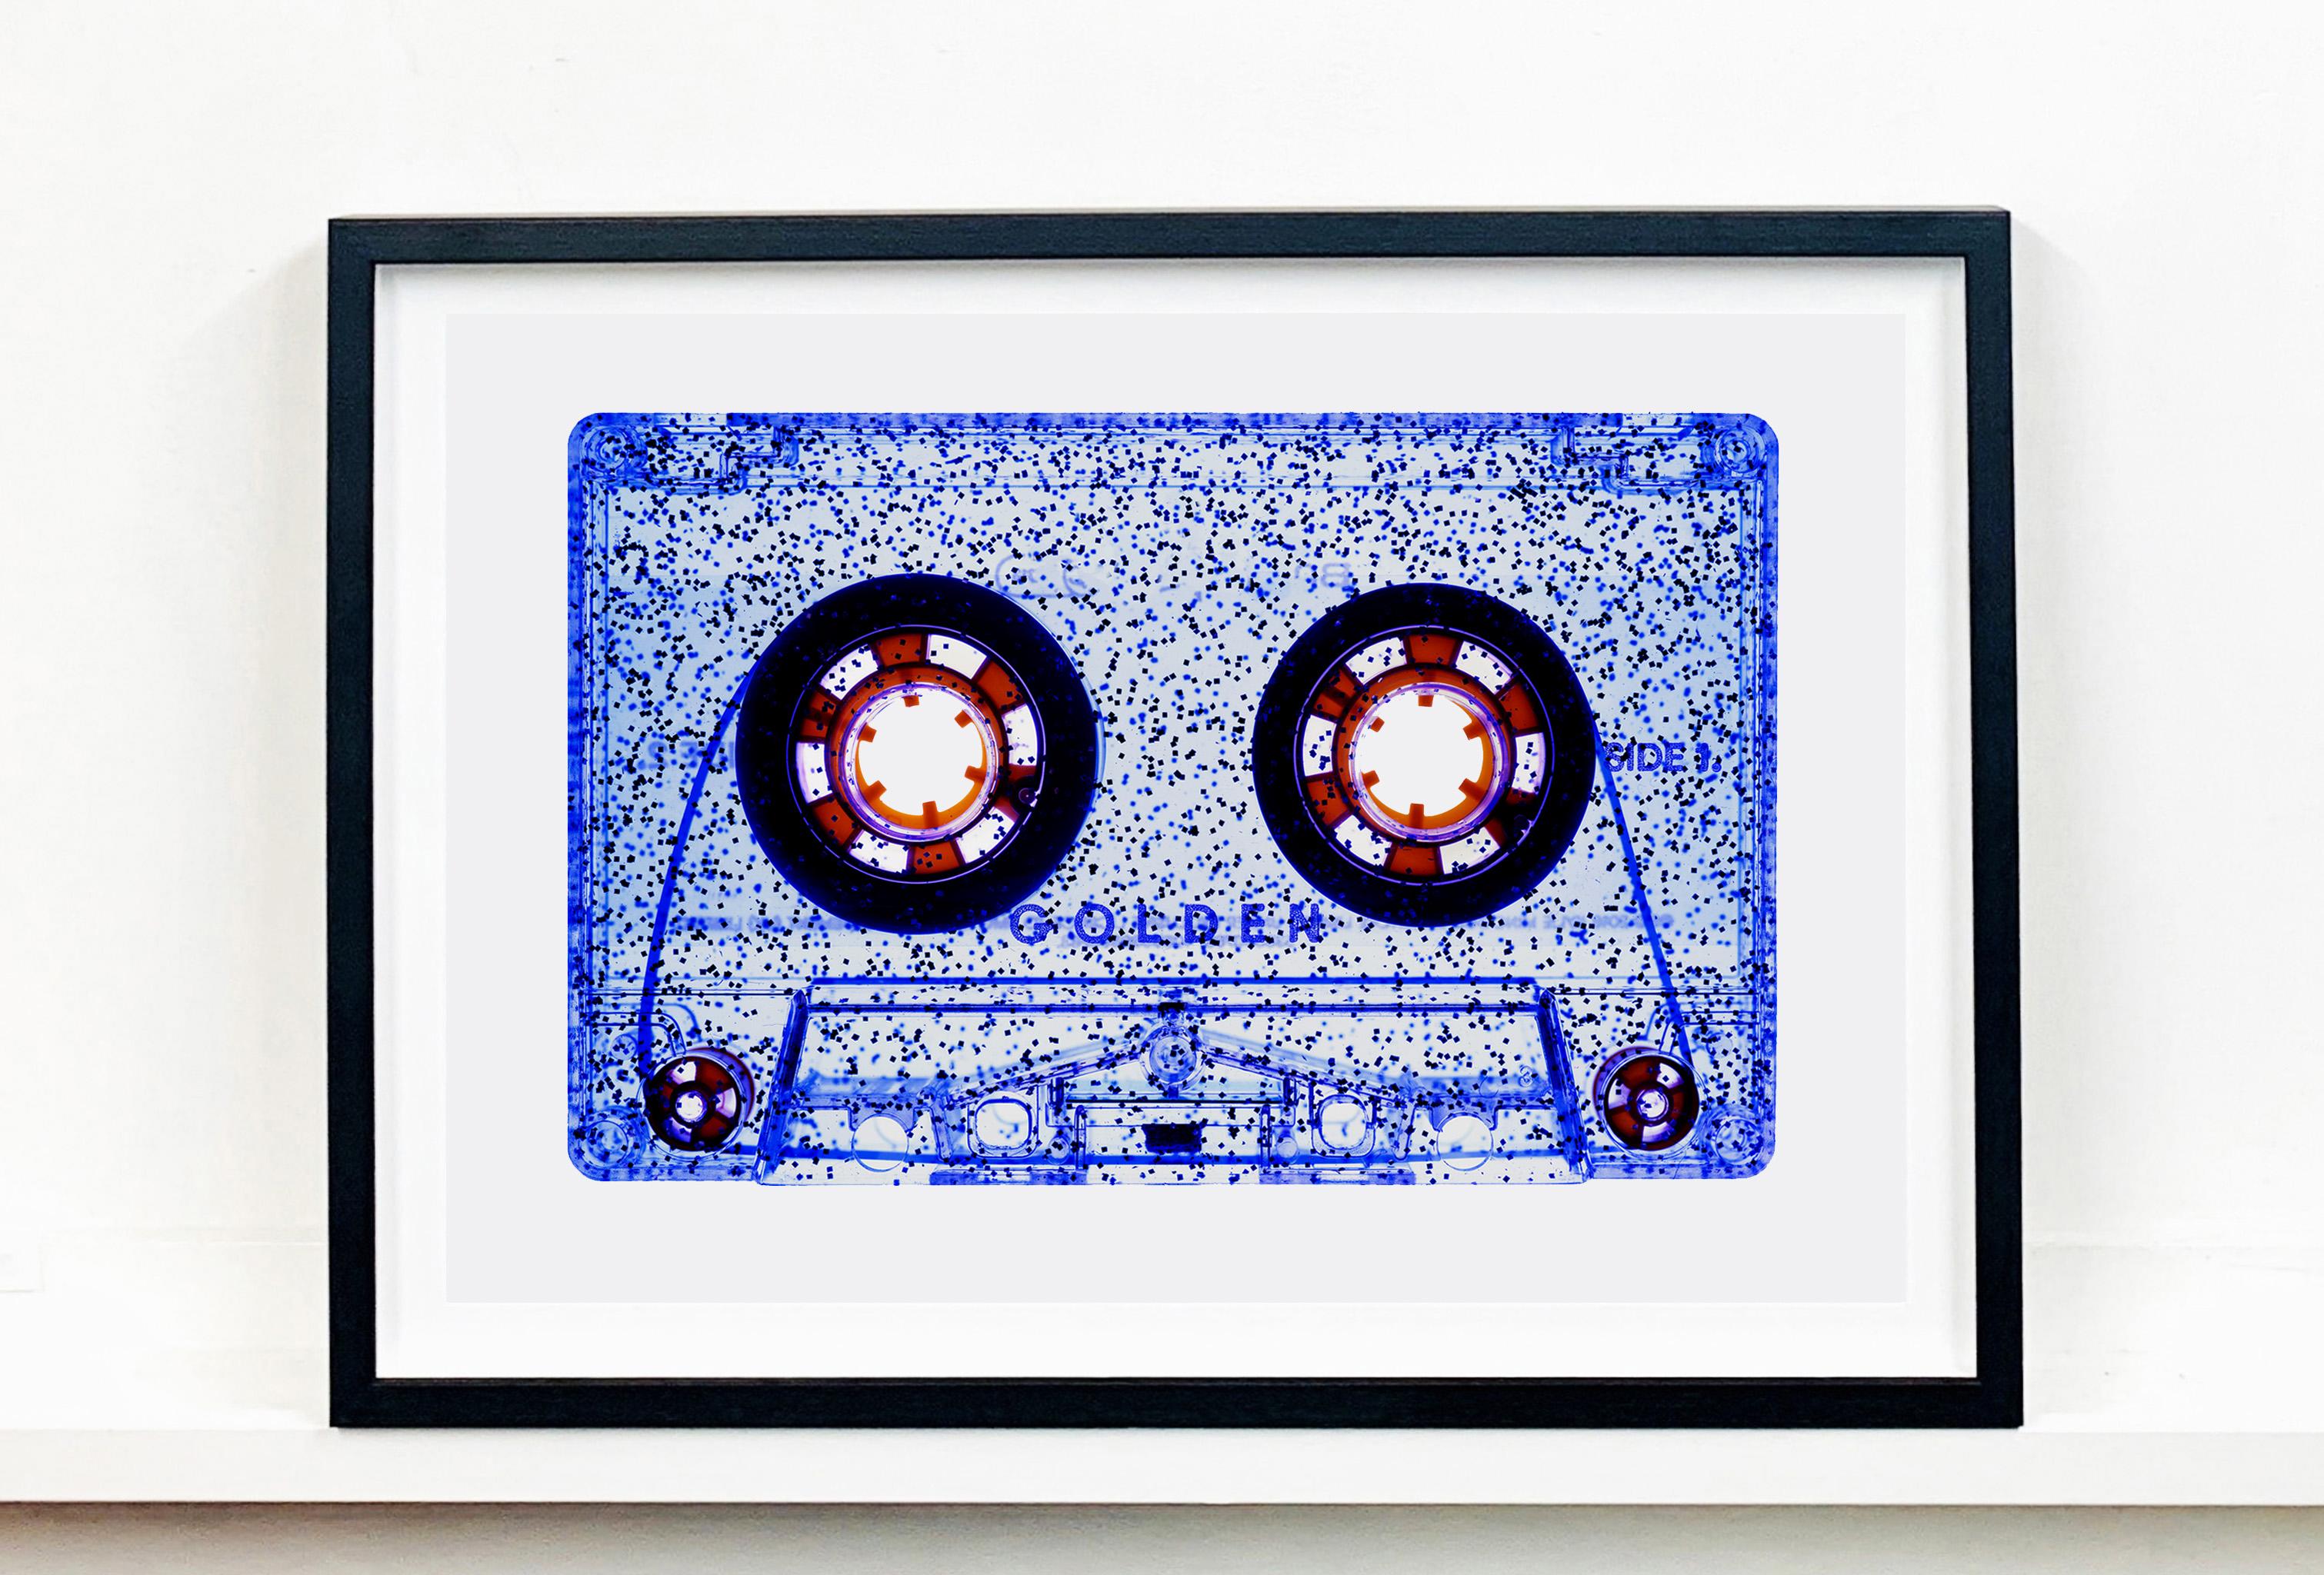 Tape-Kollektion, All That Glitters is Not Golden (Blau) – Pop-Art-Fotografie – Print von Heidler & Heeps